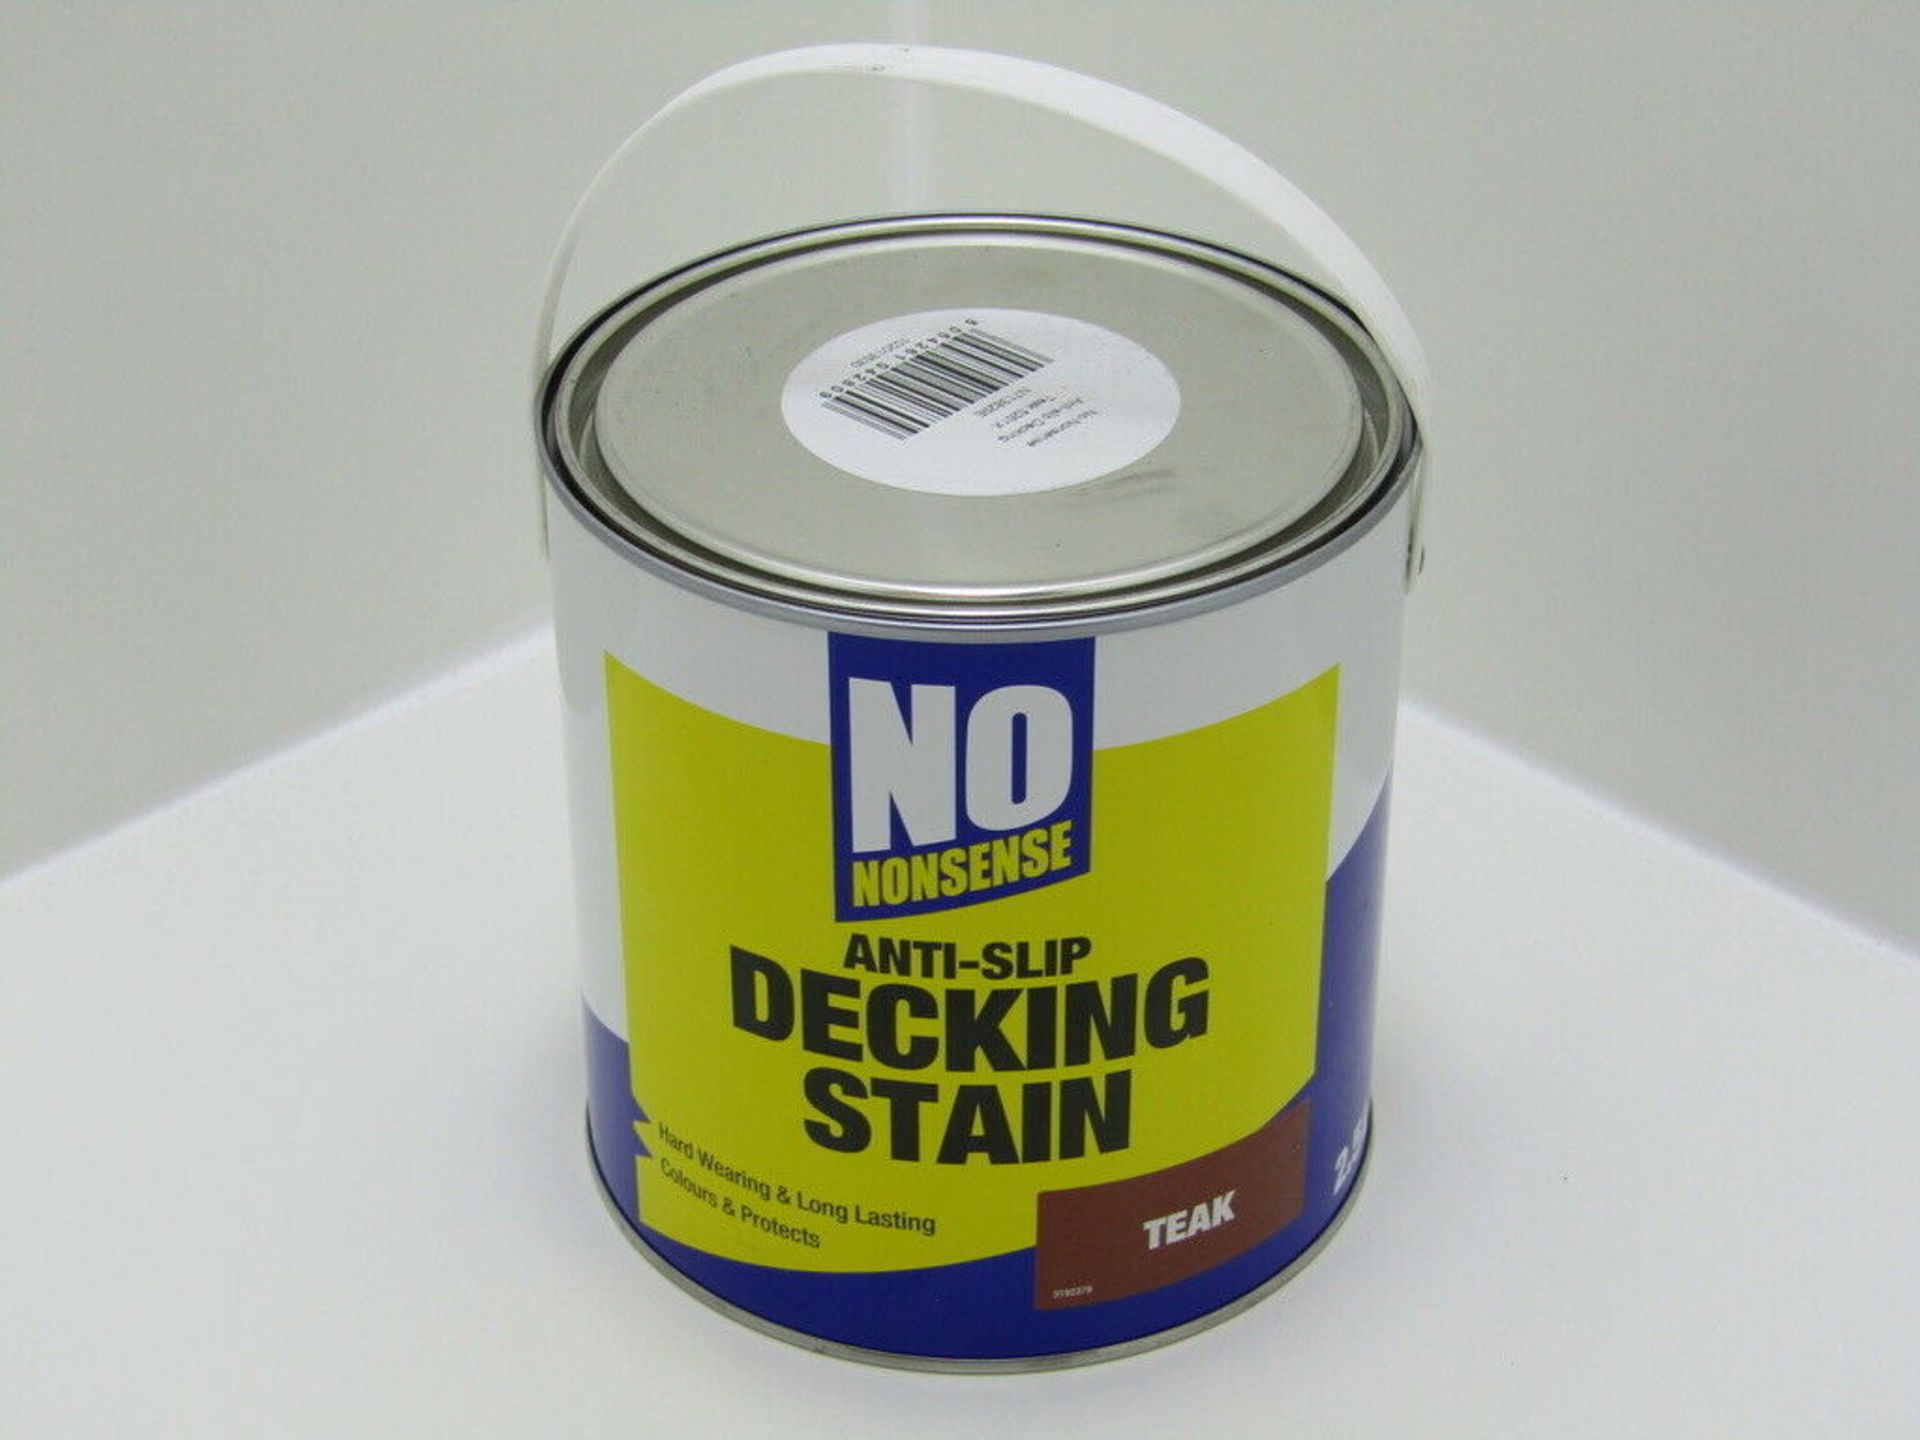 Anti Slip Decking Paint. Teak. 2.5 litre - Image 2 of 4